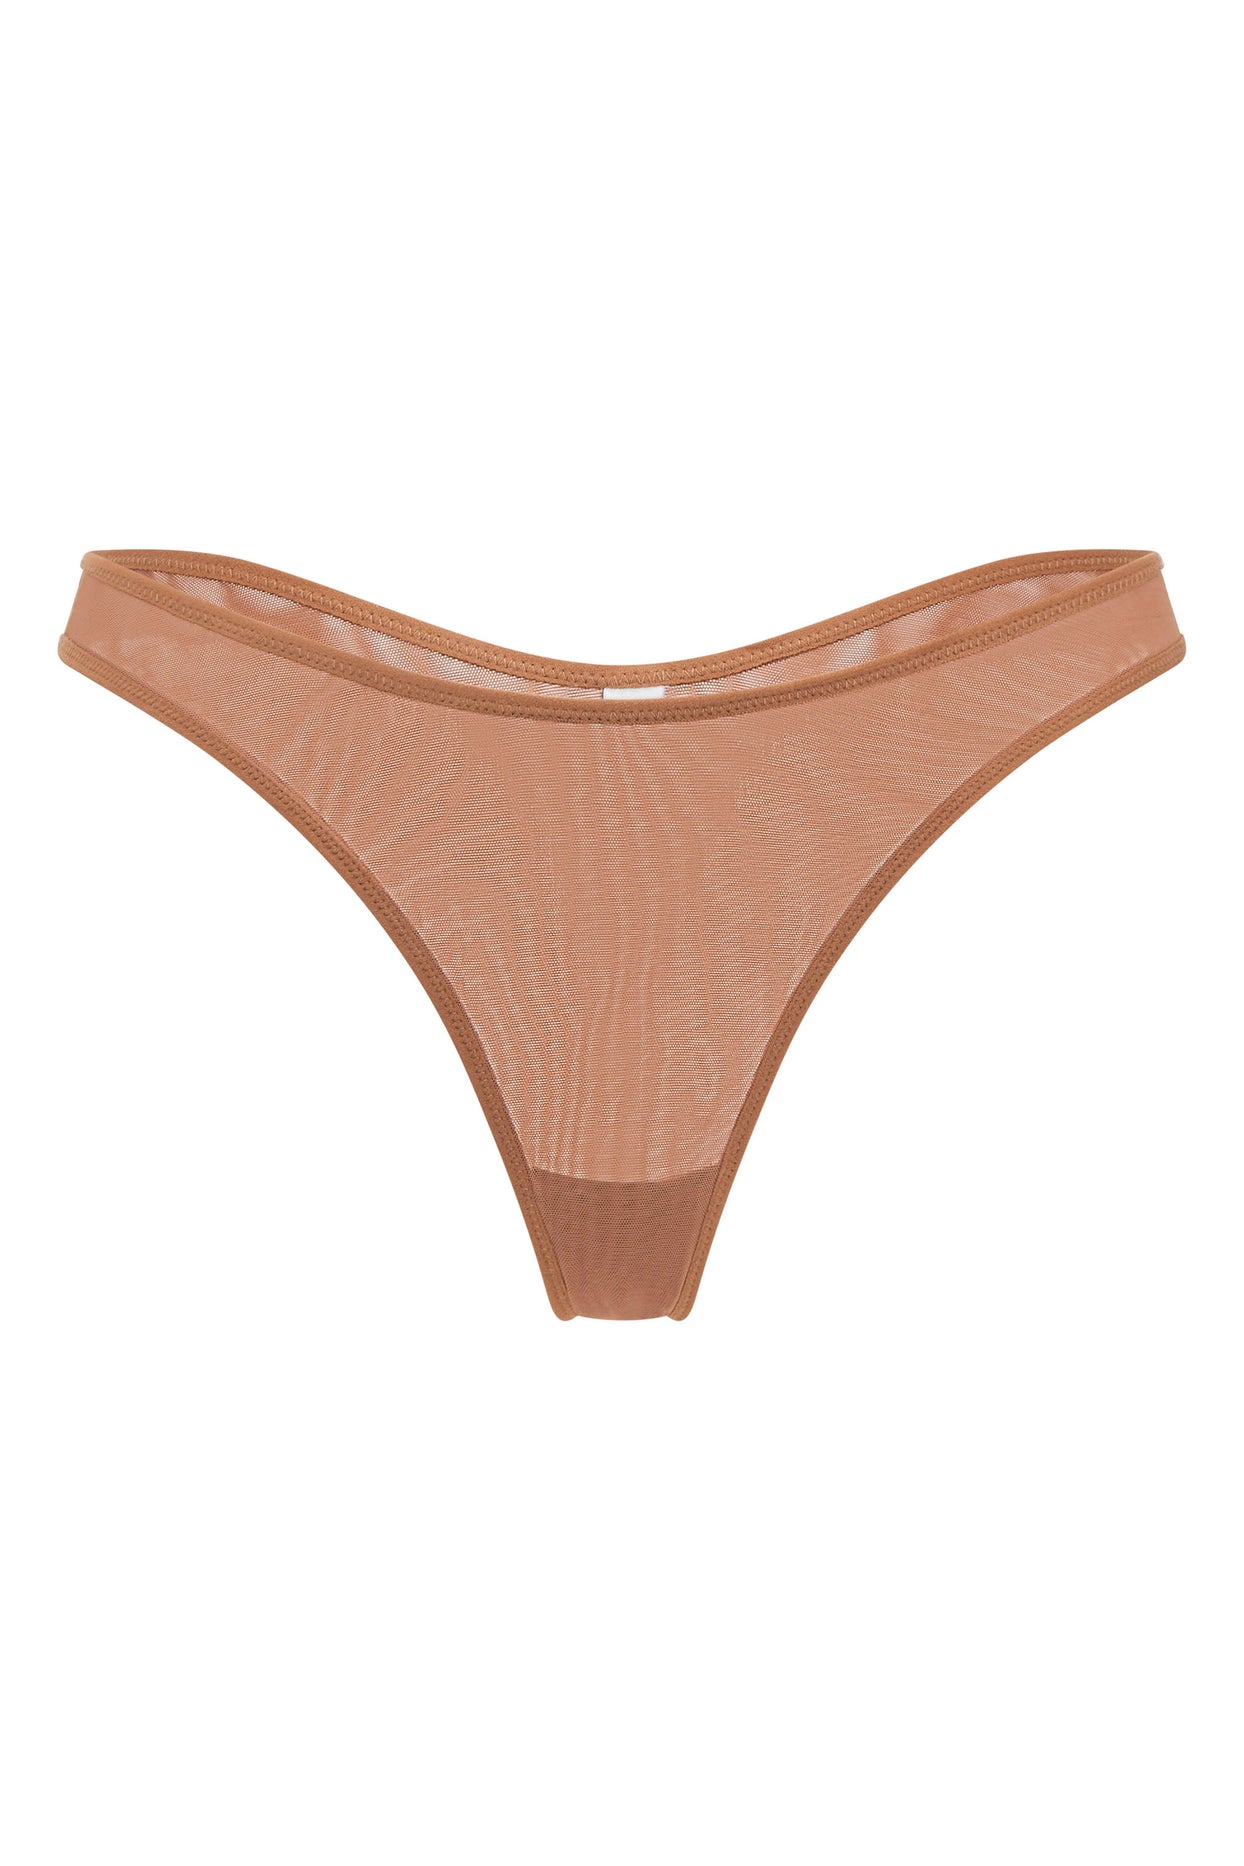 Sexy Women Micro G-String Underwear Bikini Set Bra Top Thong Lingerie Swimw  KP